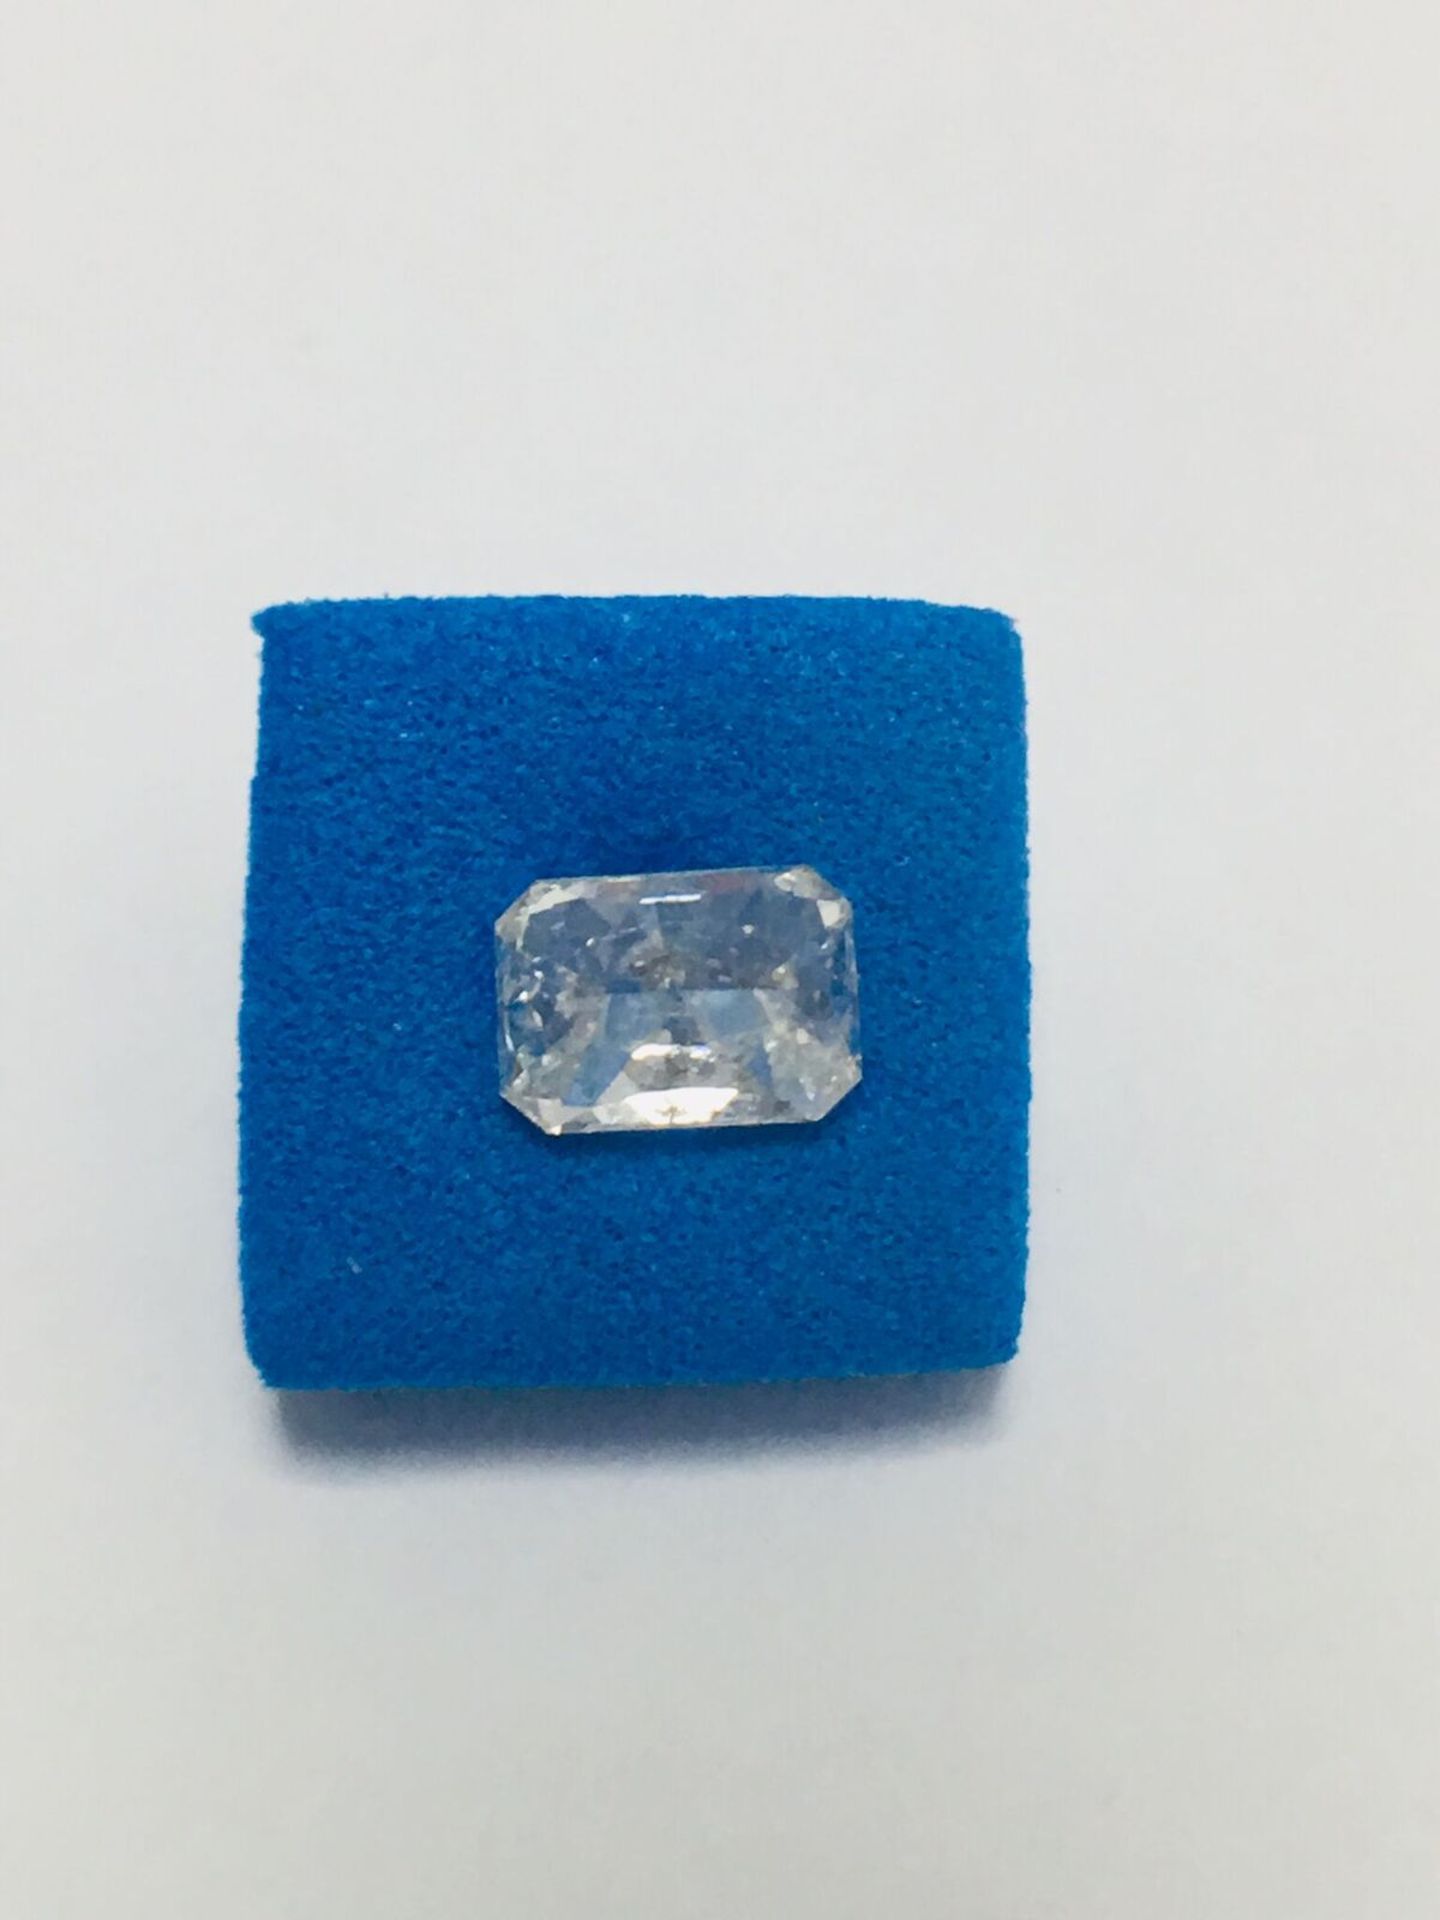 1.08ct Radiant Cut Natural Diamond - Image 2 of 3